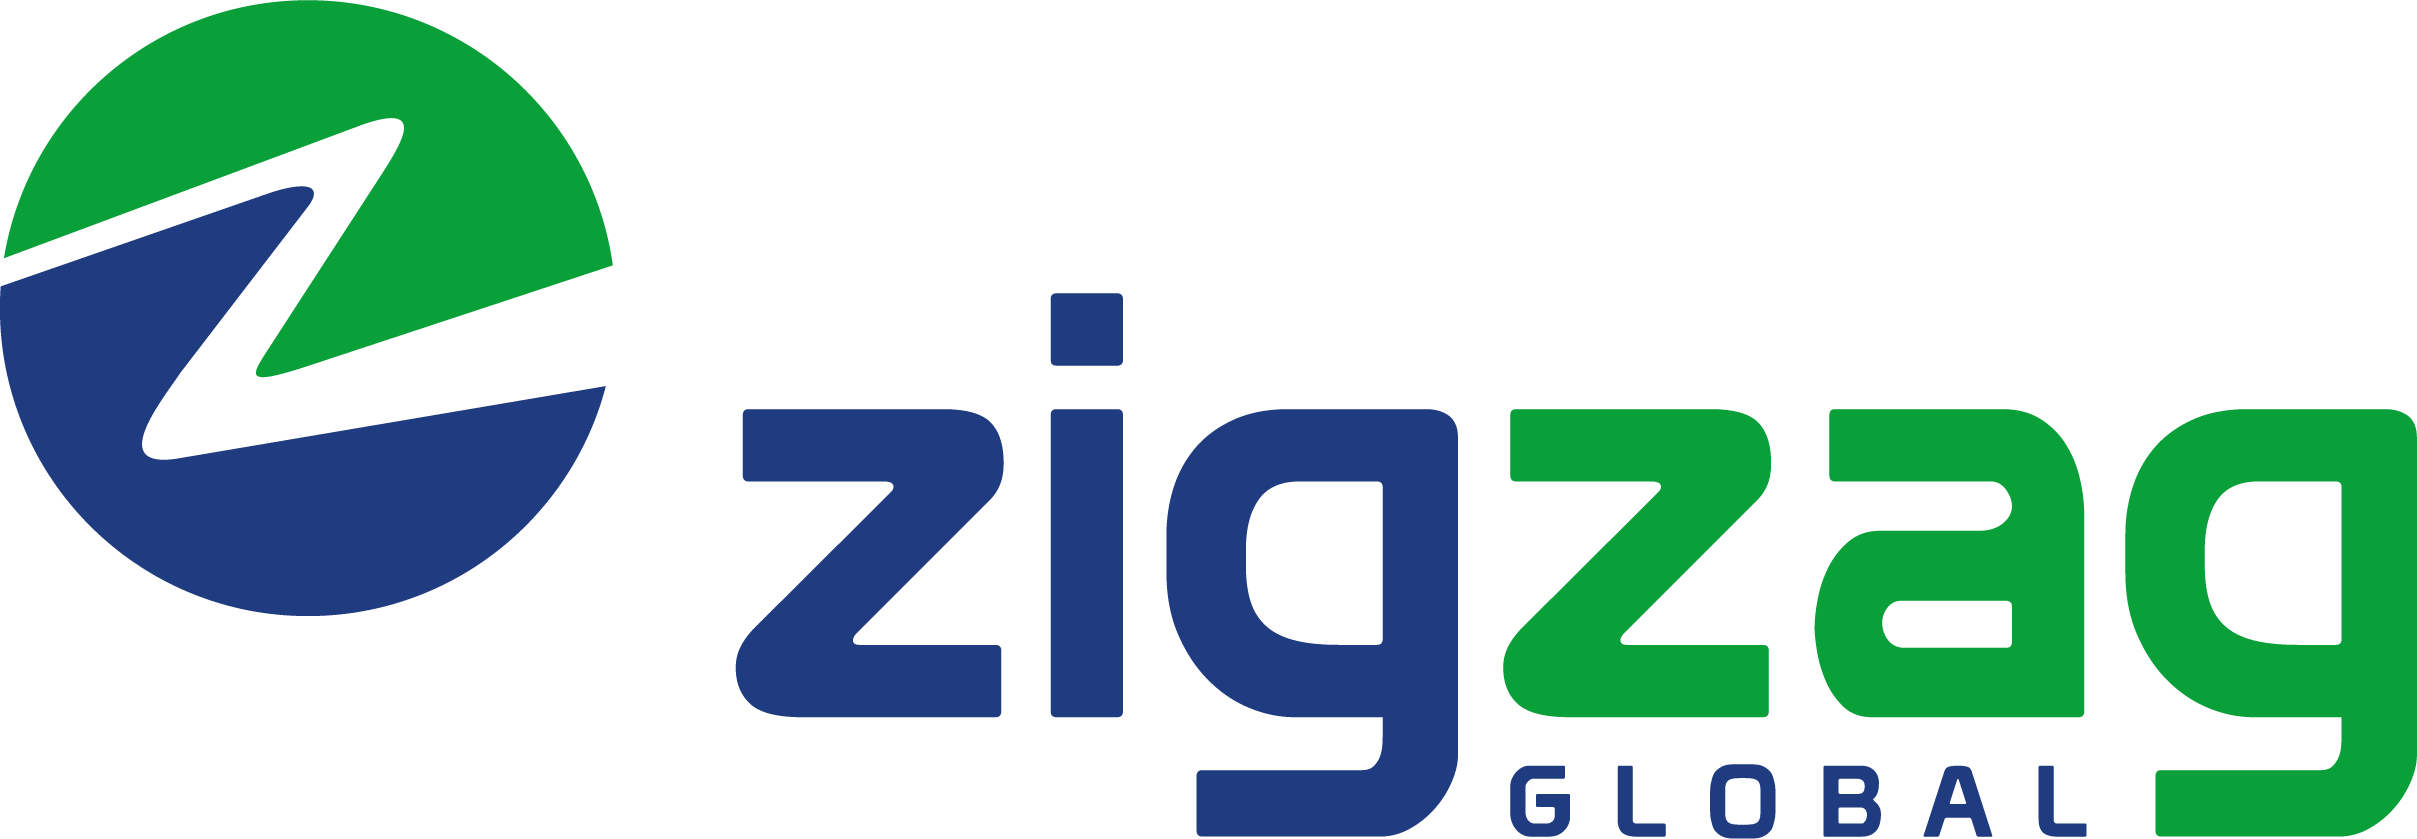 ZigZag Global Logo 2021